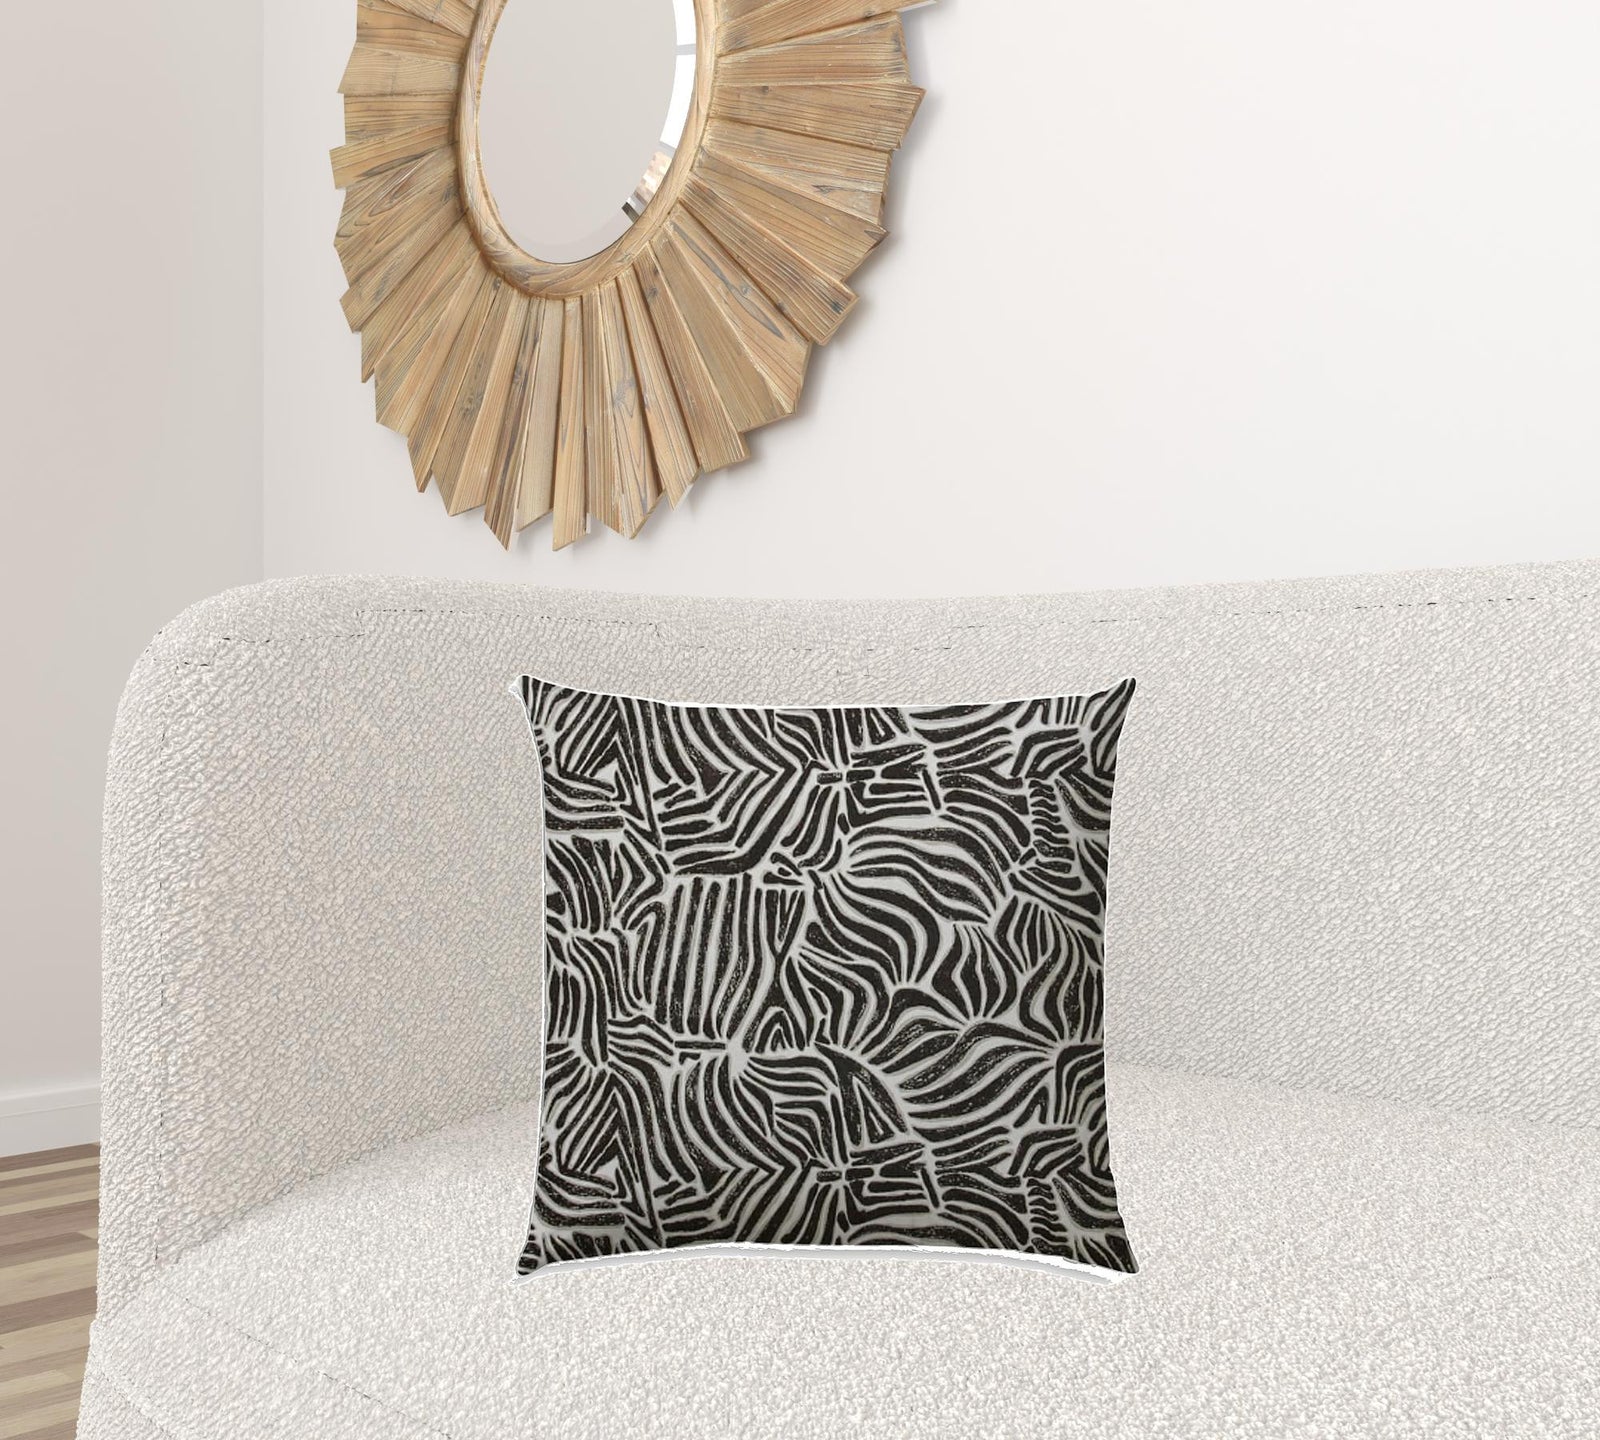 20" X 20" Black And White Safari Animals Blown Seam Animal Print Throw Indoor Outdoor Pillow